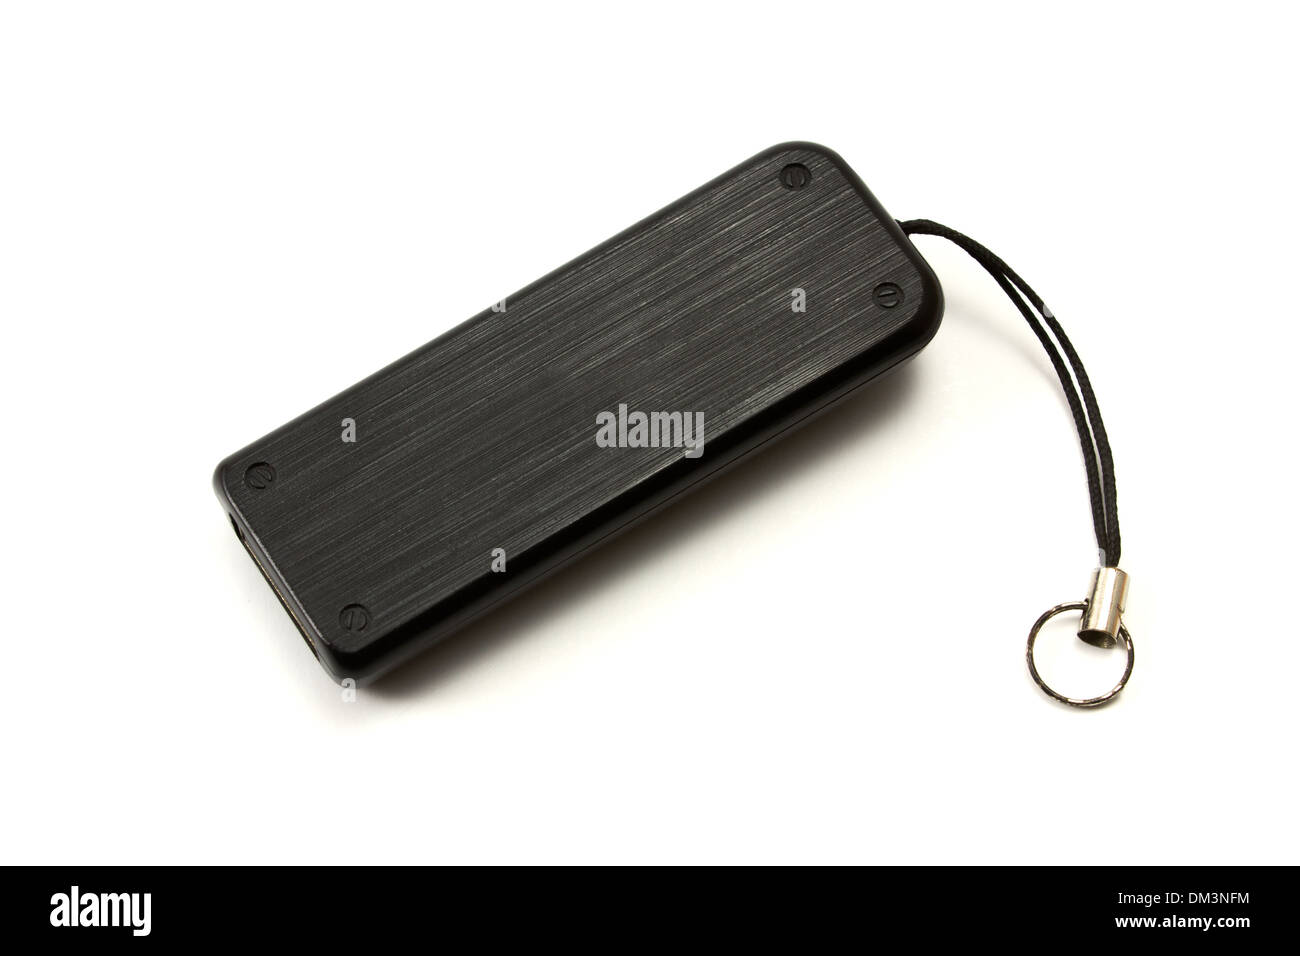 USB flash drive on white background Stock Photo